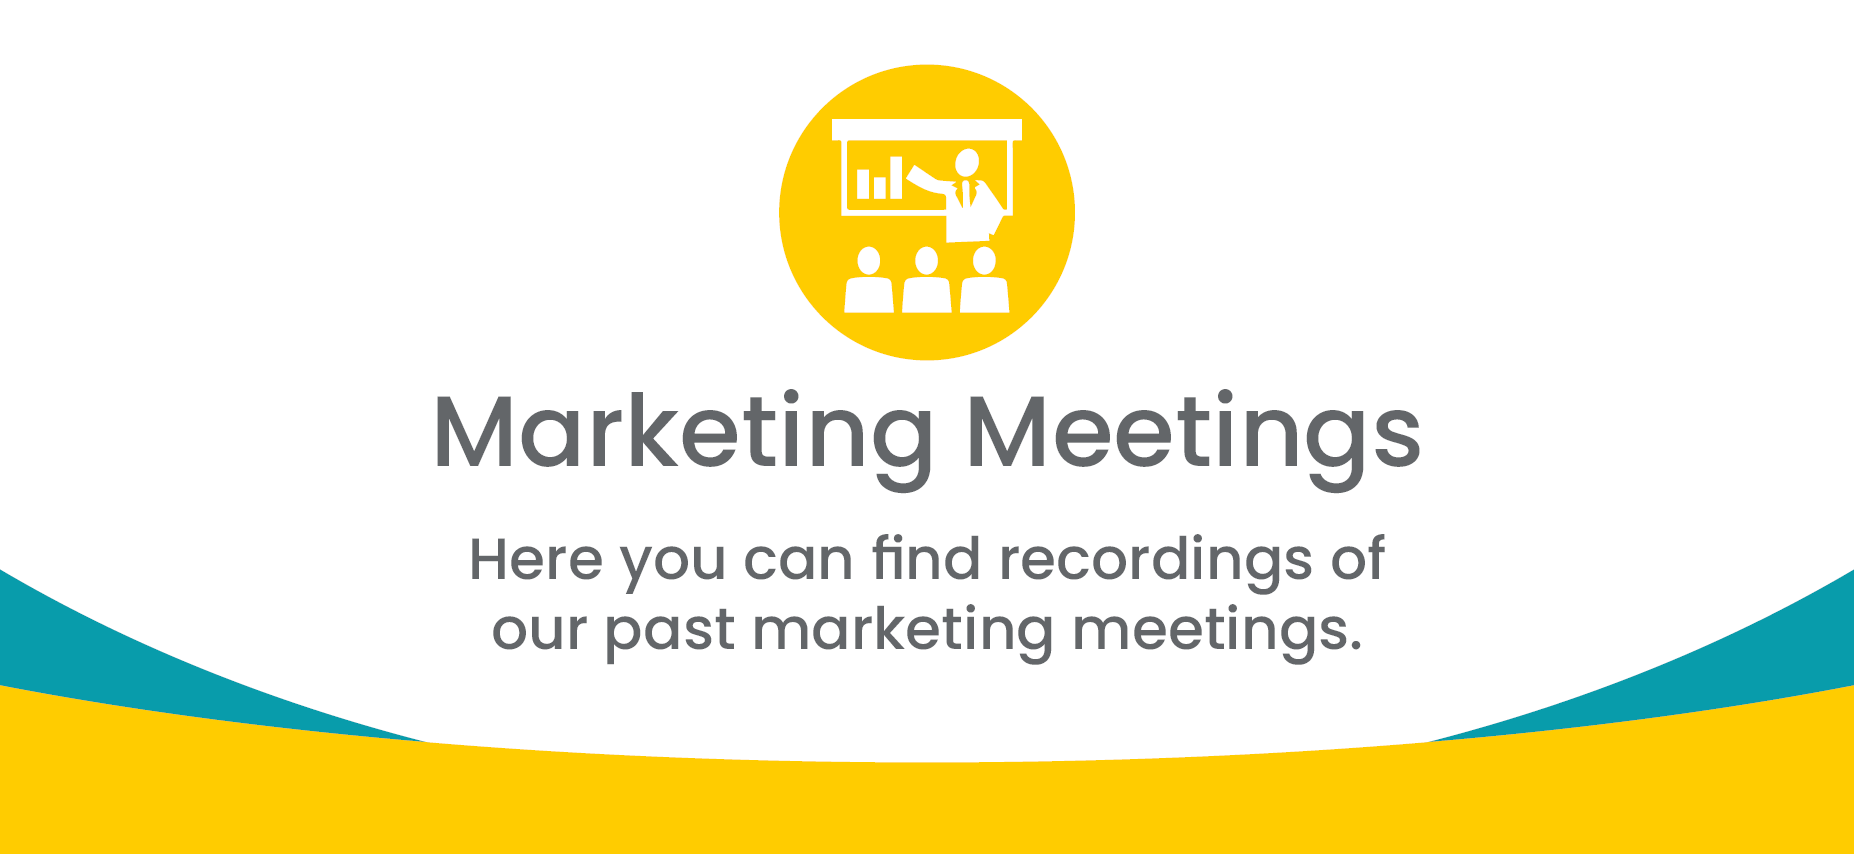 Marketing Meeting